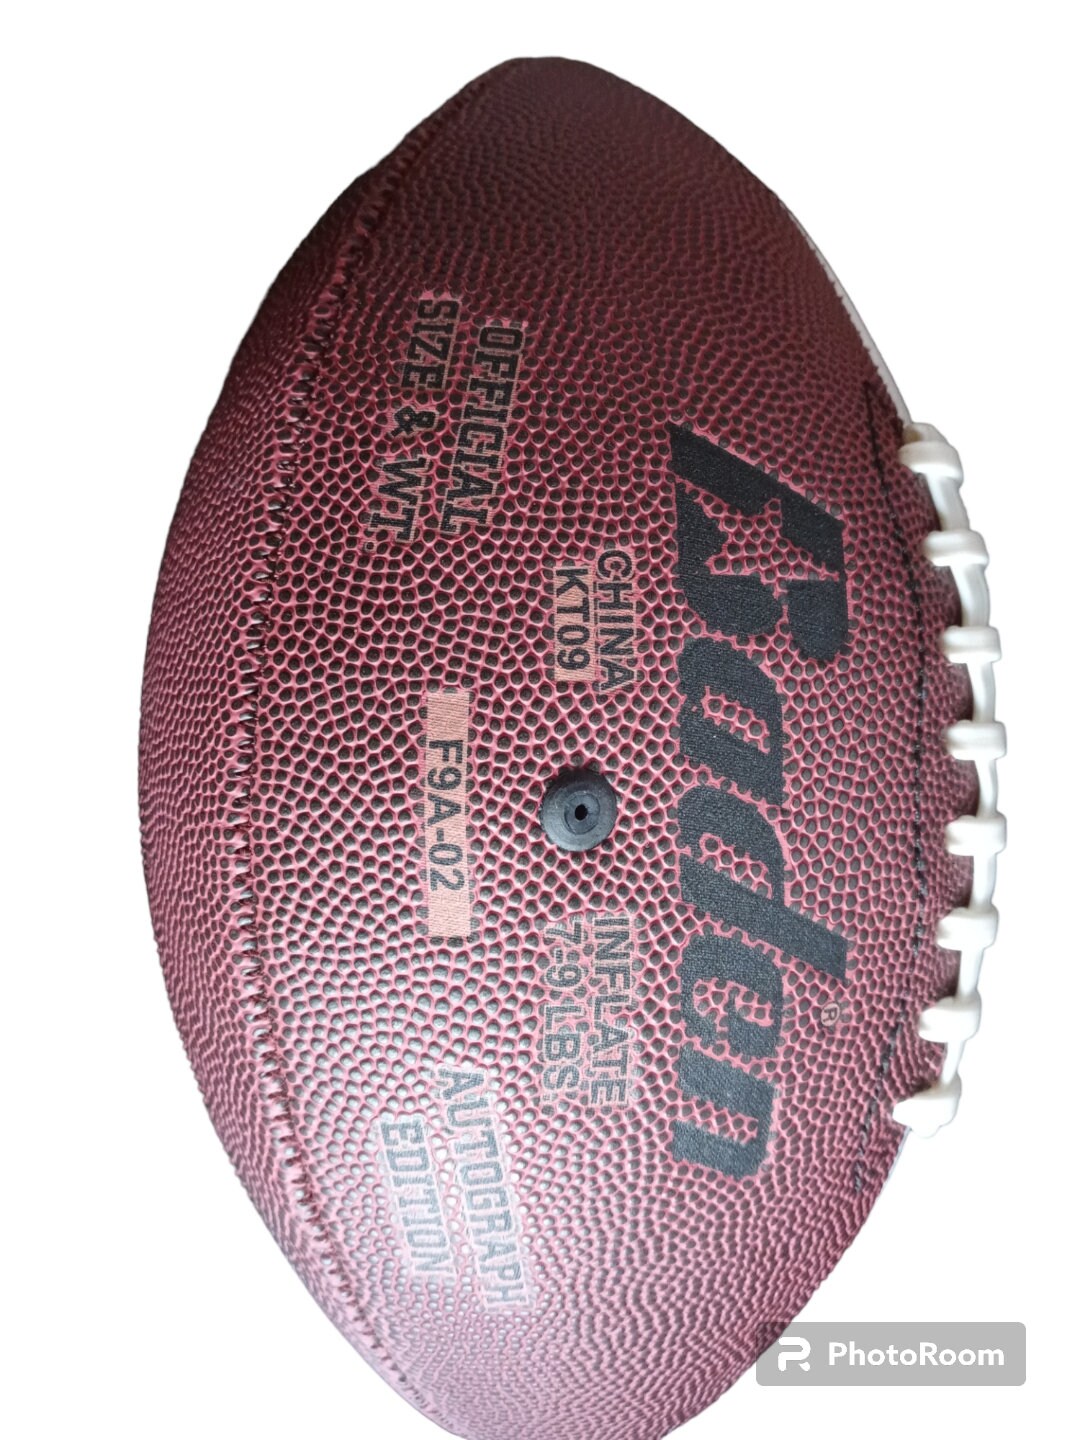 Wilson NFL Pro Jr Composite Football